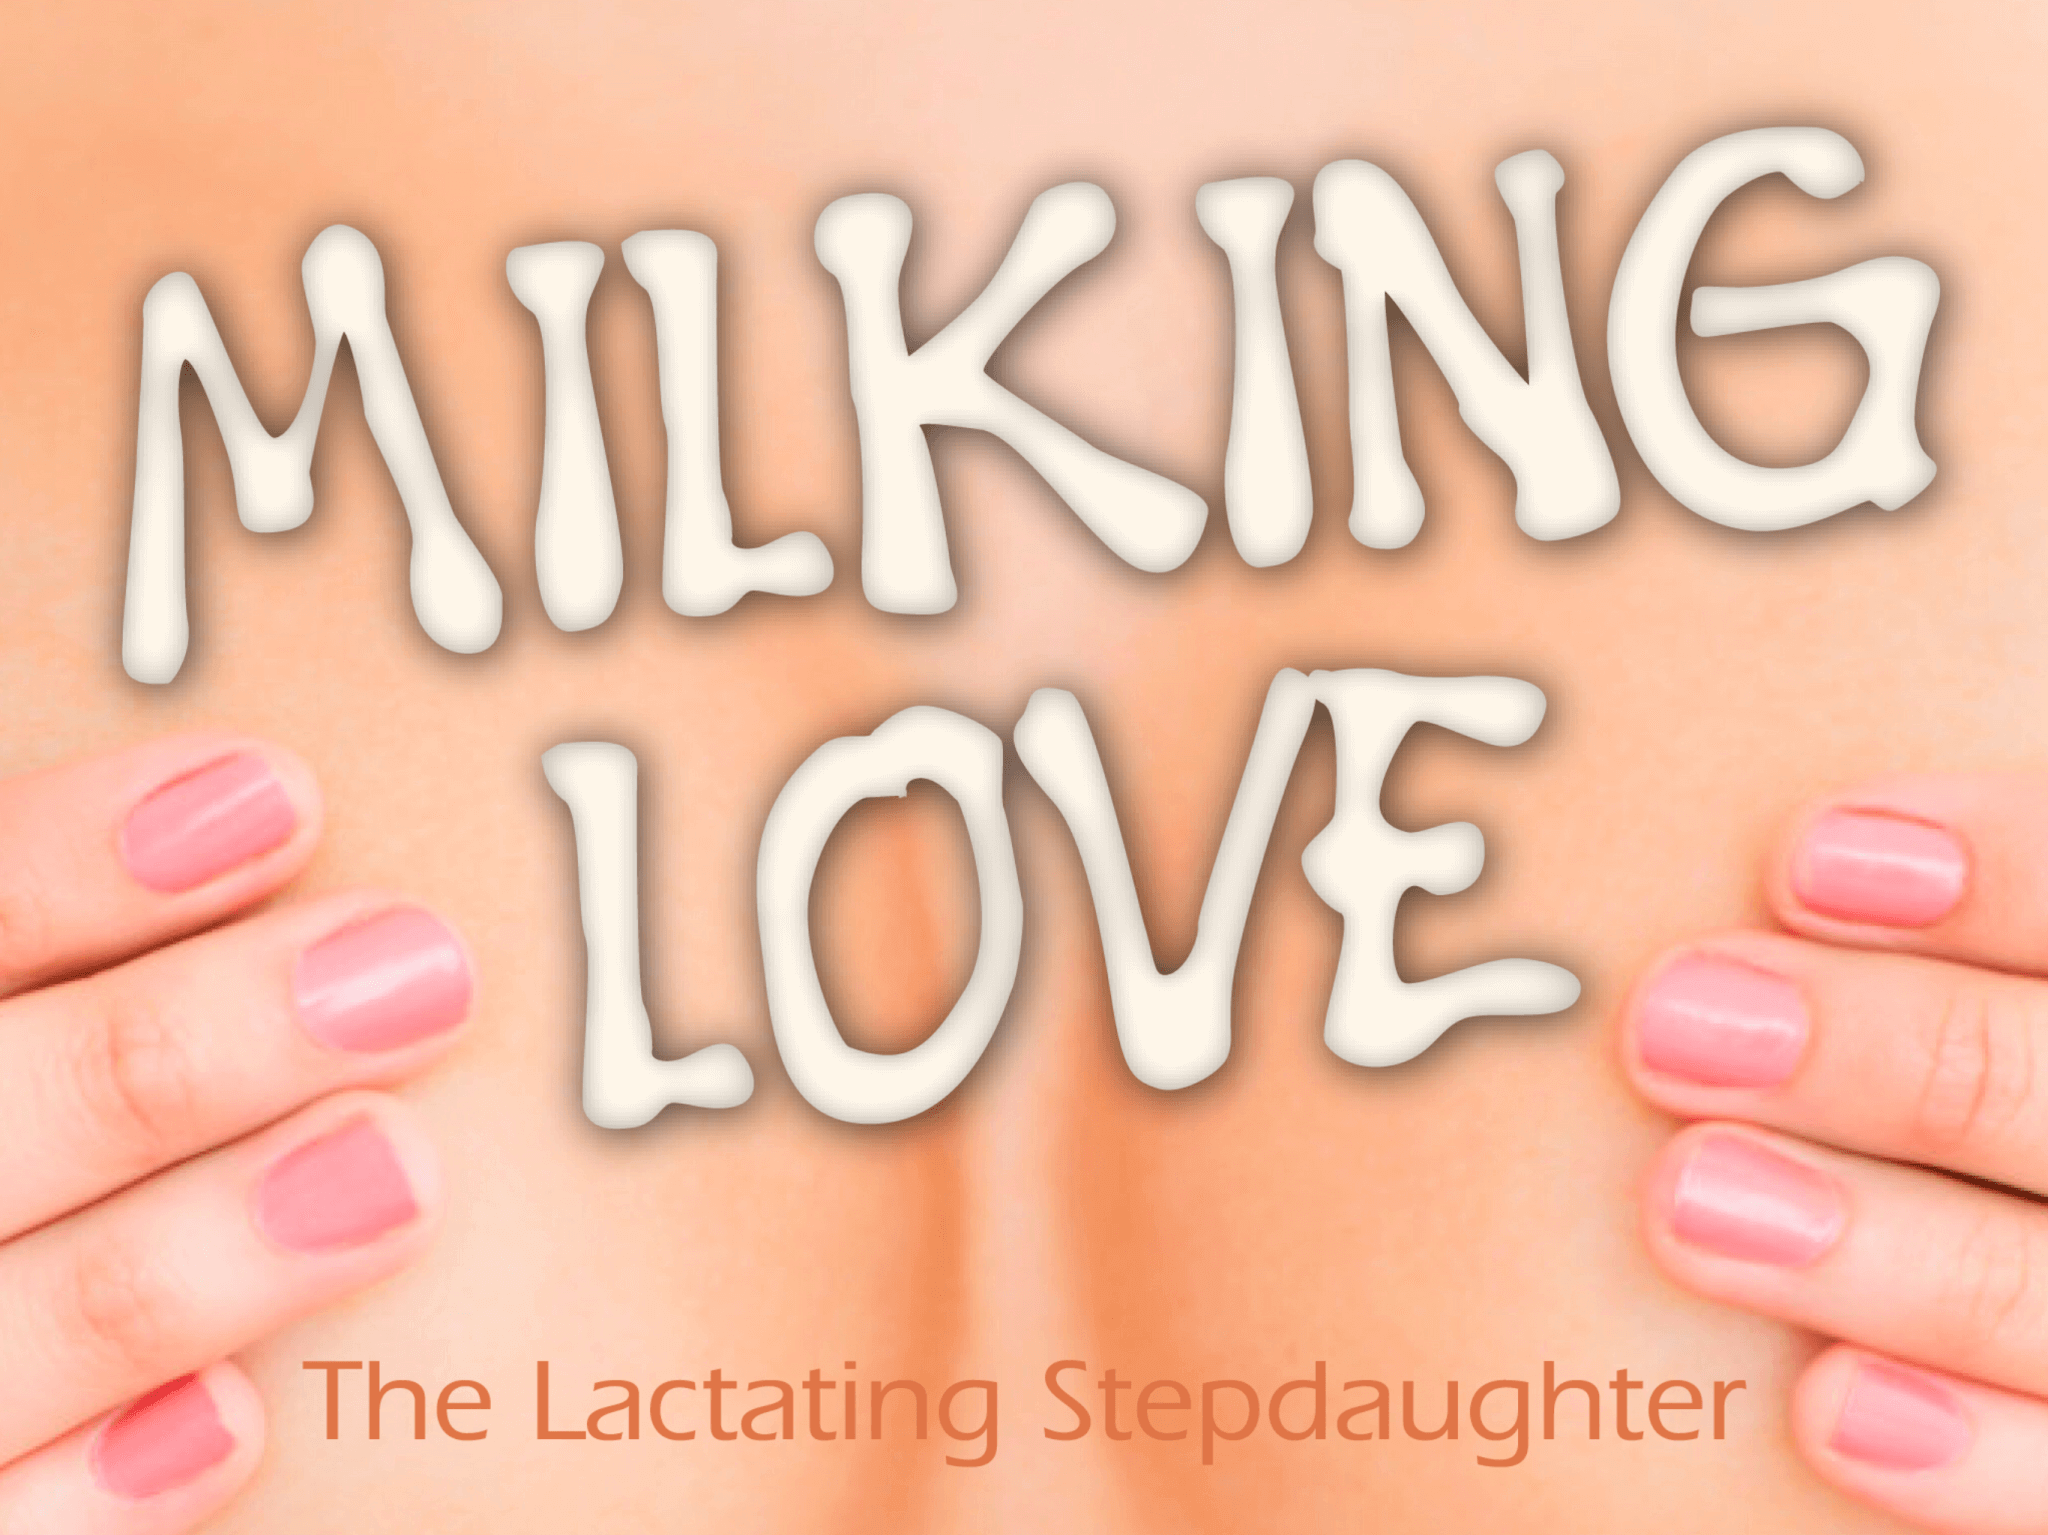 Milking stepdaughter love